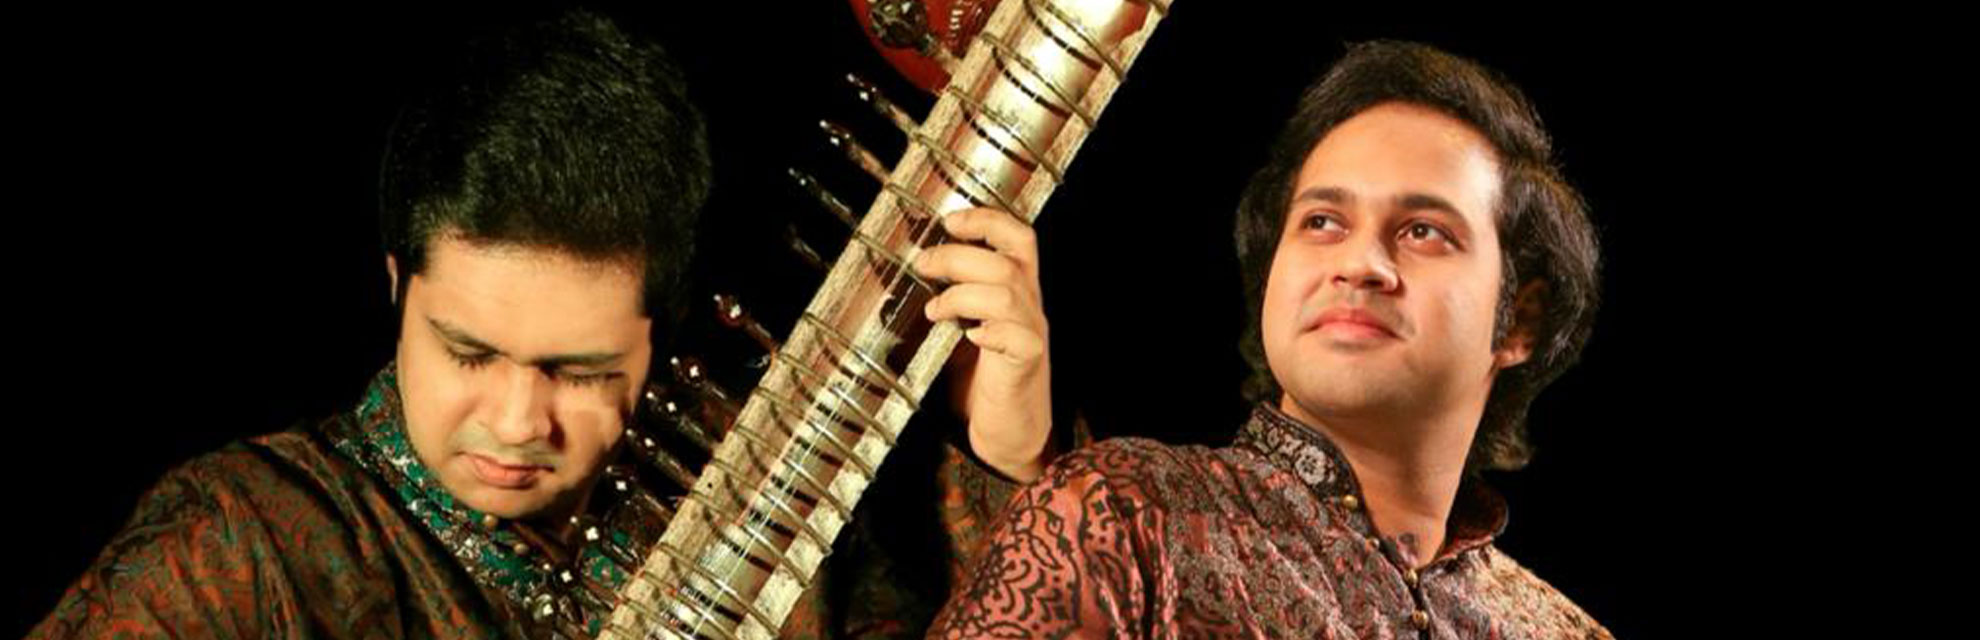 'jugalbandi' العالمية: الأخوان موهان يأخذون الموسيقى الهندوستانية إلى العالم